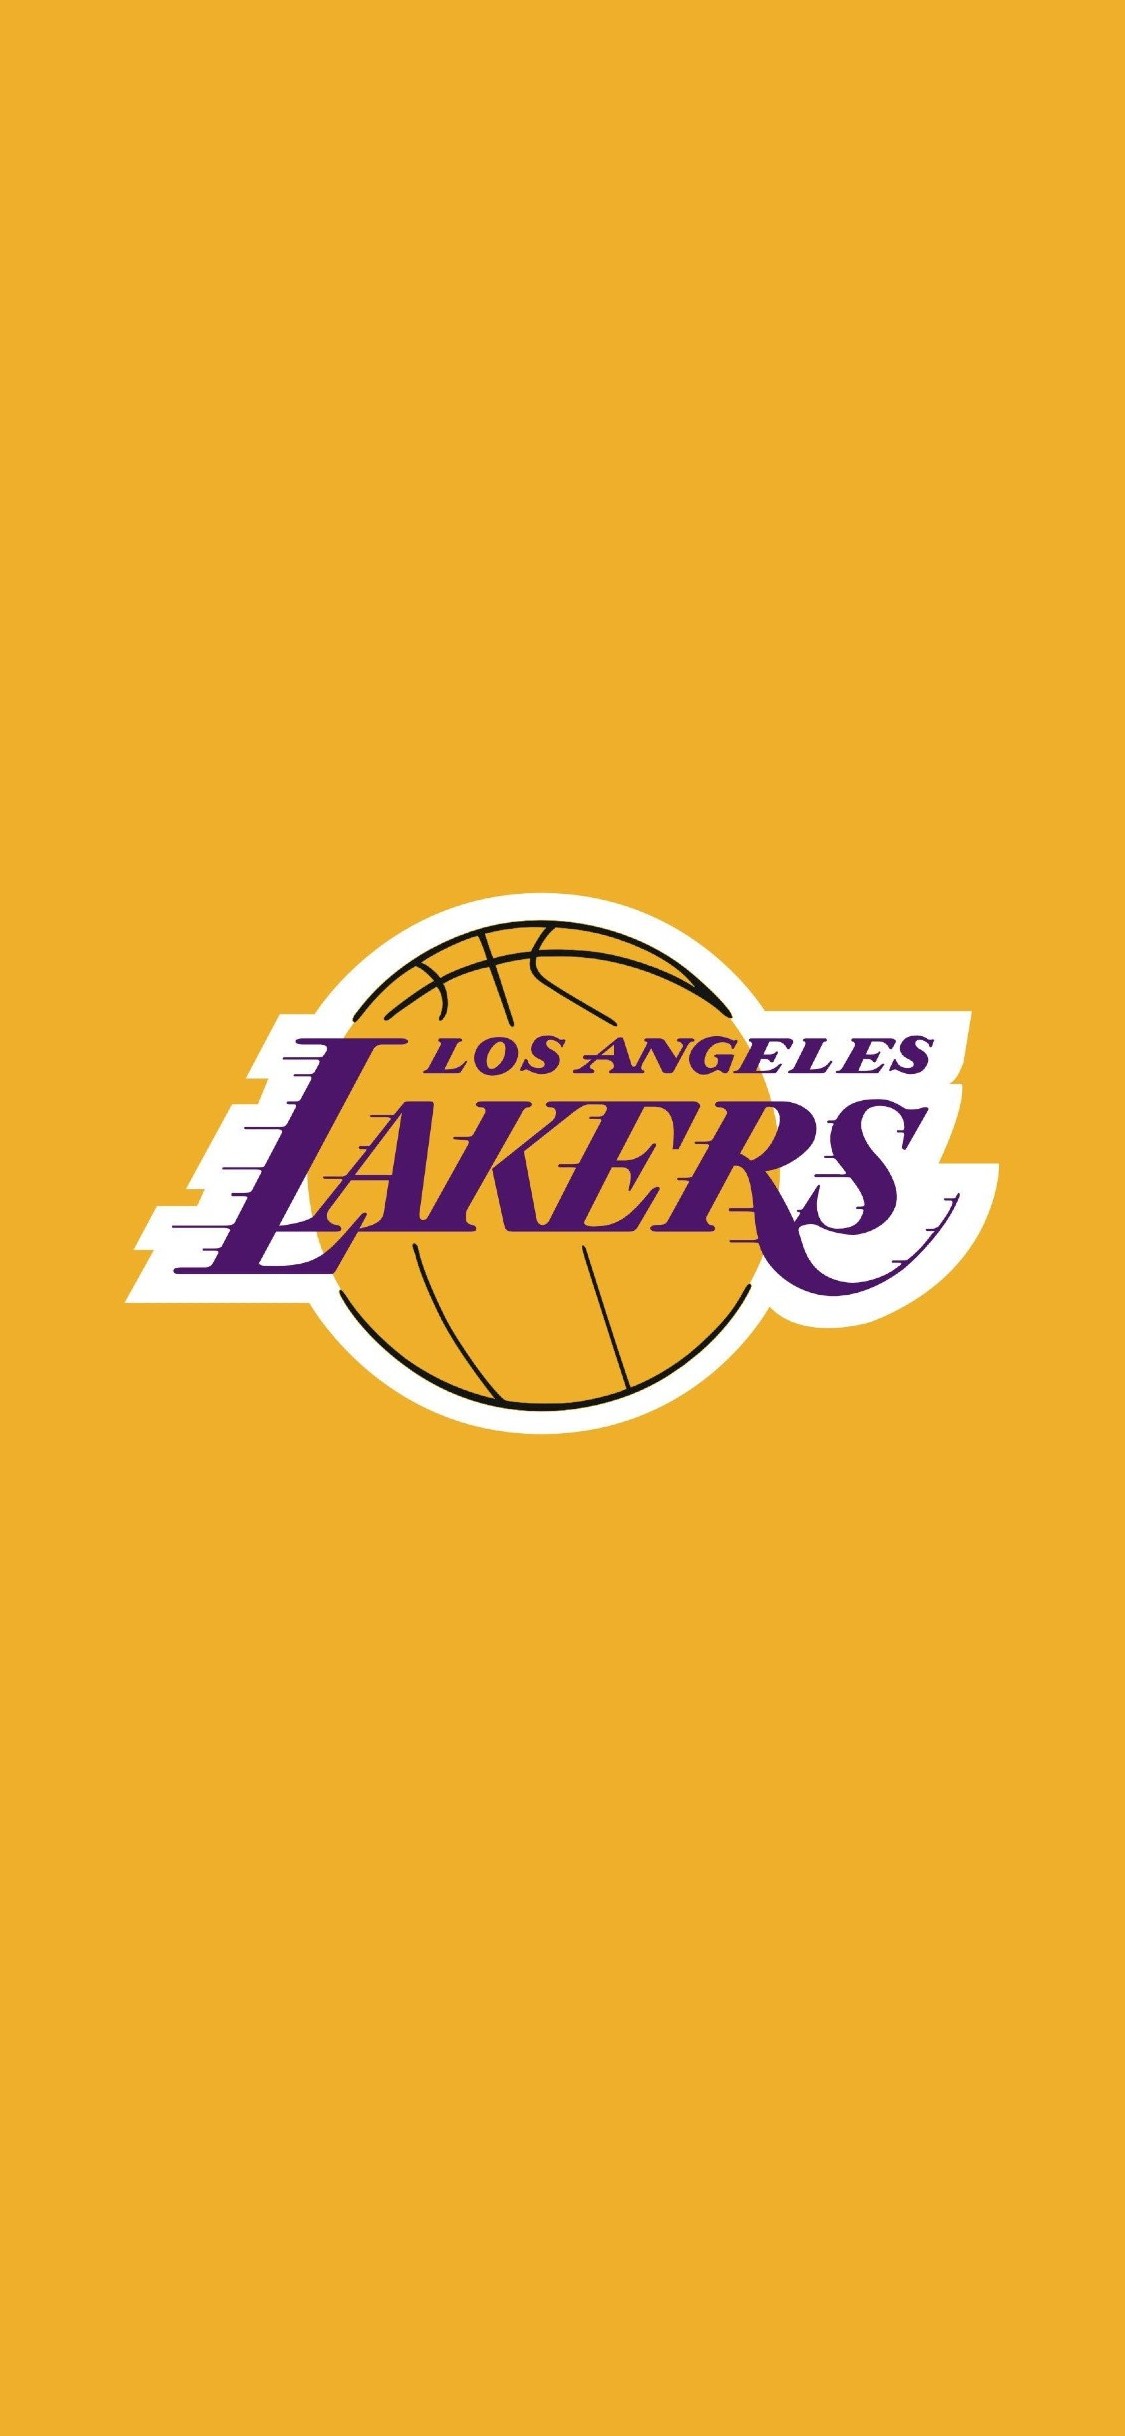 Los Angeles Lakers バスケ Iphone X スマホ壁紙 待ち受け スマラン